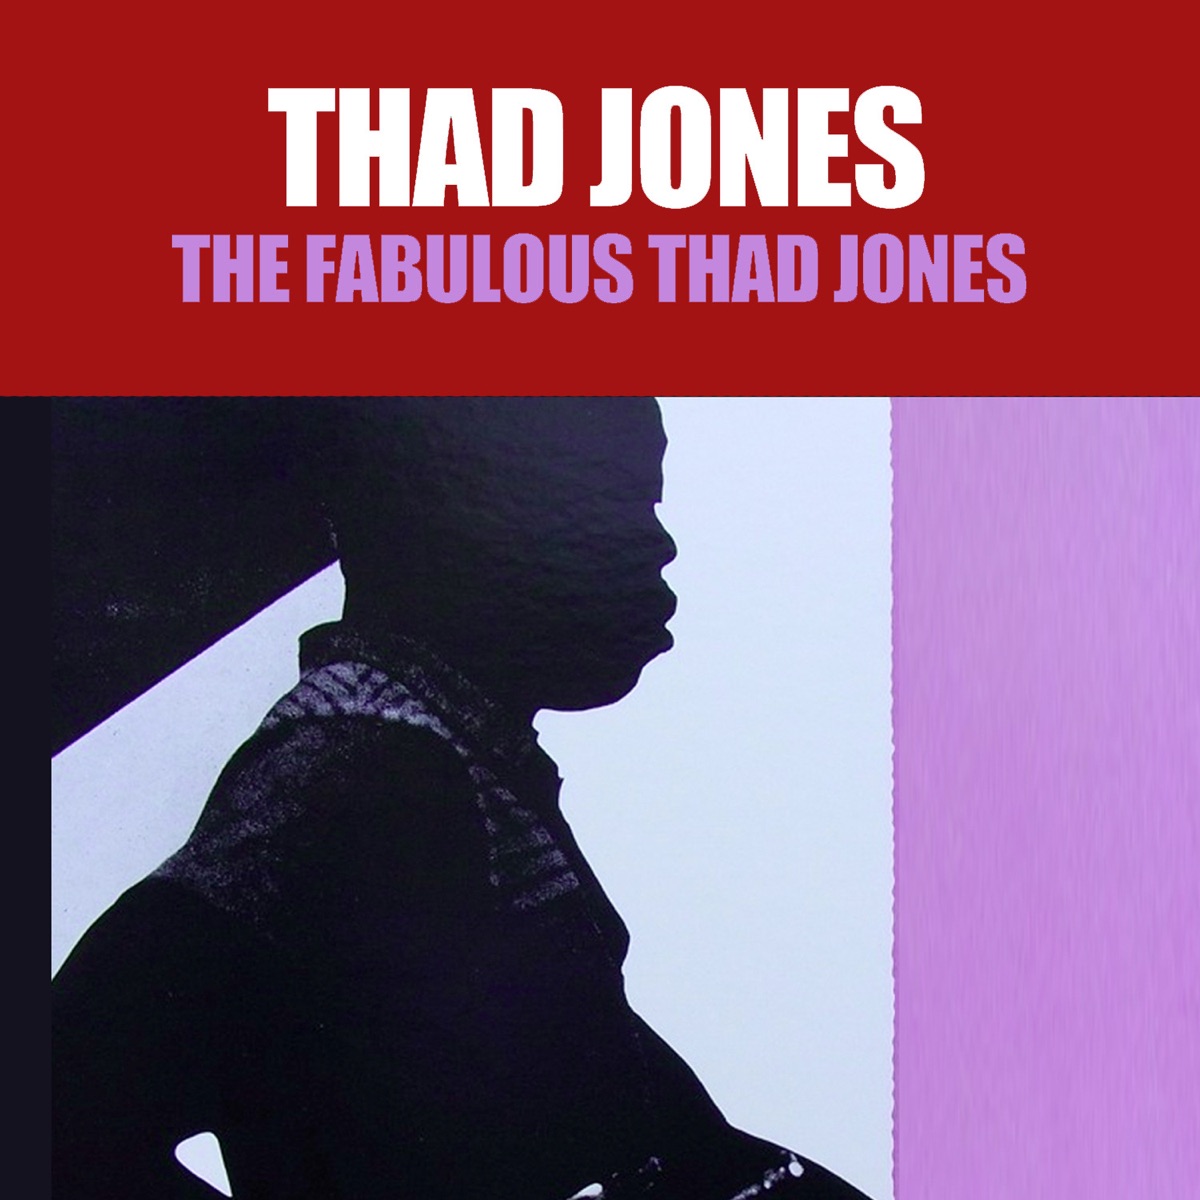 The Fabulous - Album by Thad Jones - Apple Music